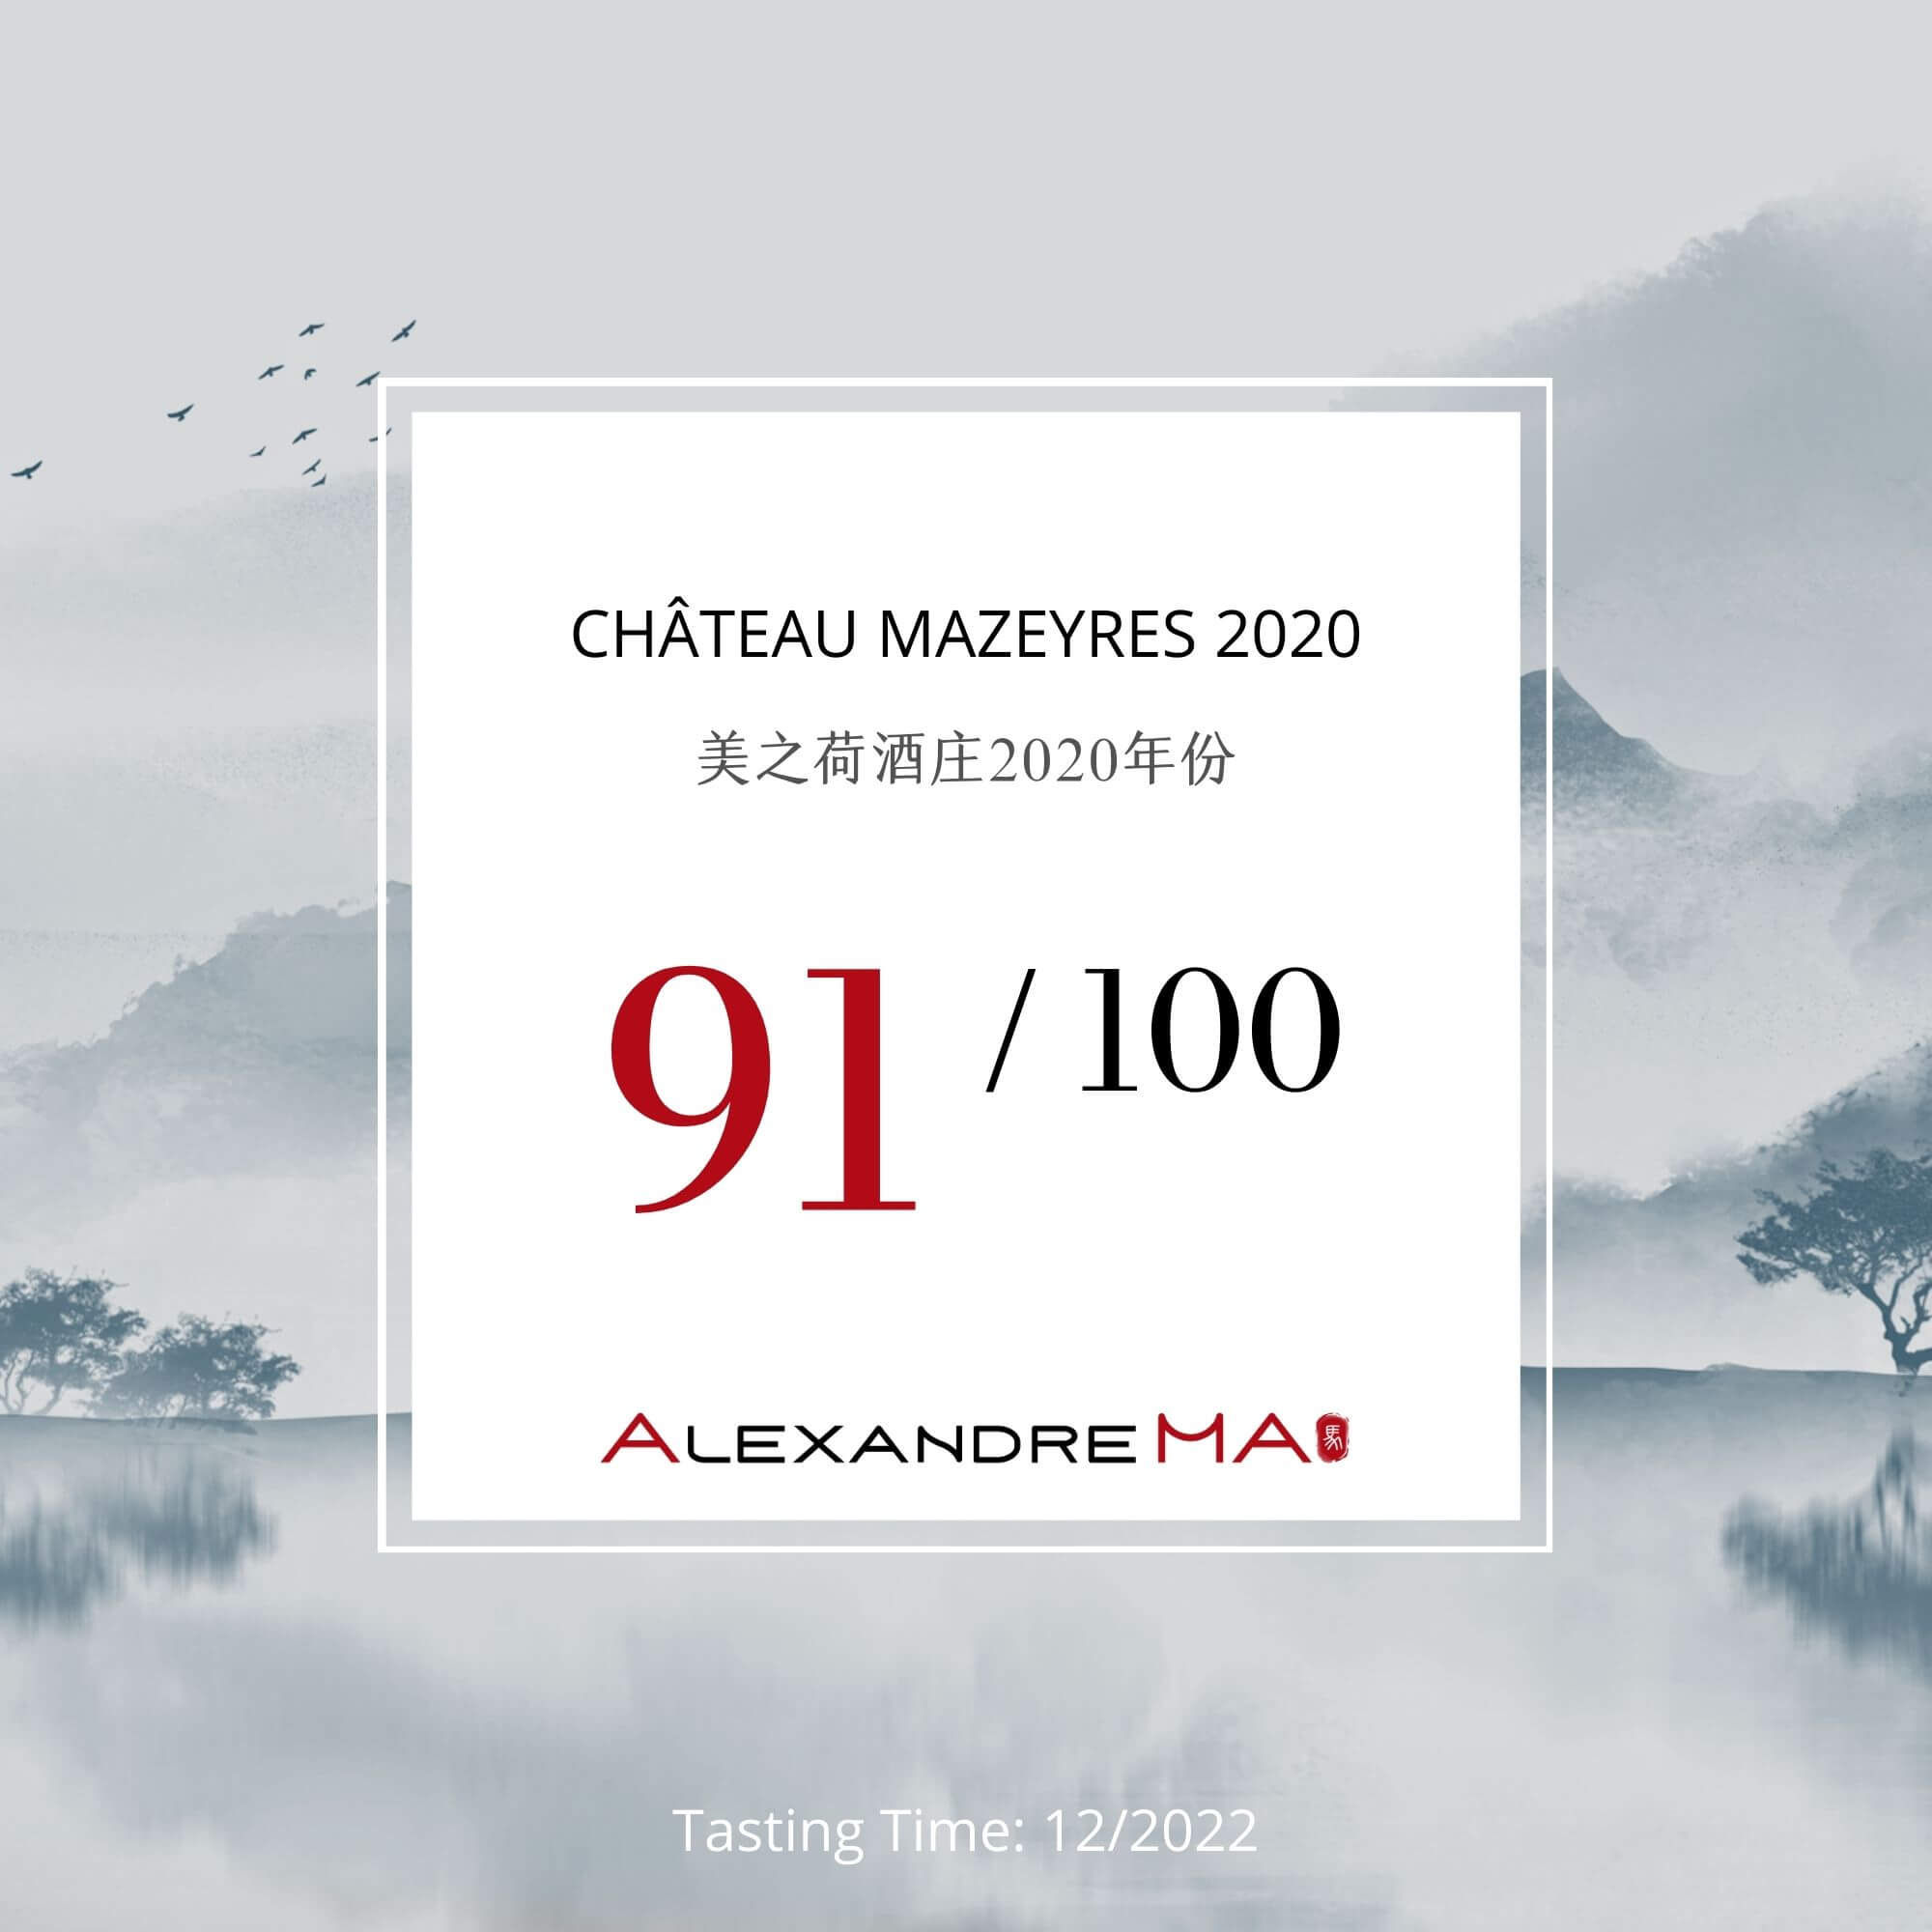 Château Mazeyres 2020 - Alexandre MA